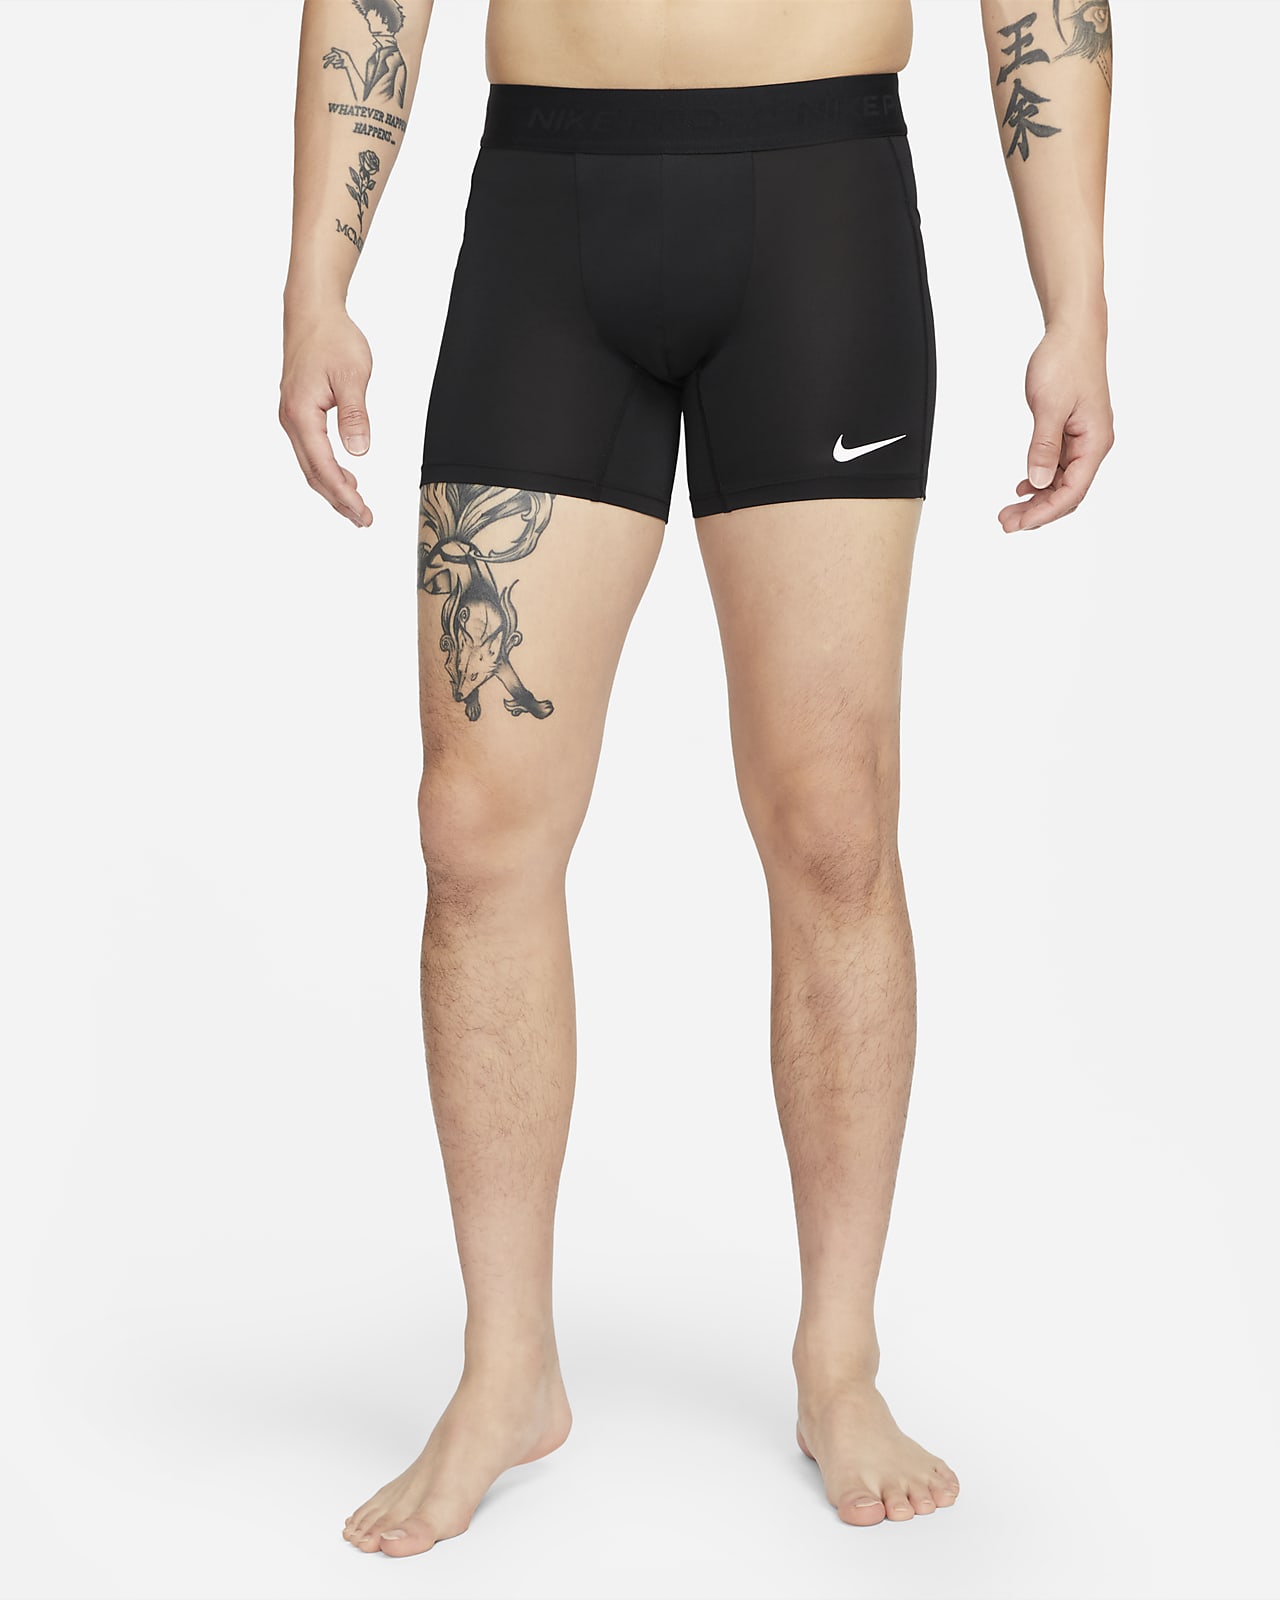 Nike PRO DRI-FIT COOL Compression Brief Shorts NBA Basketball